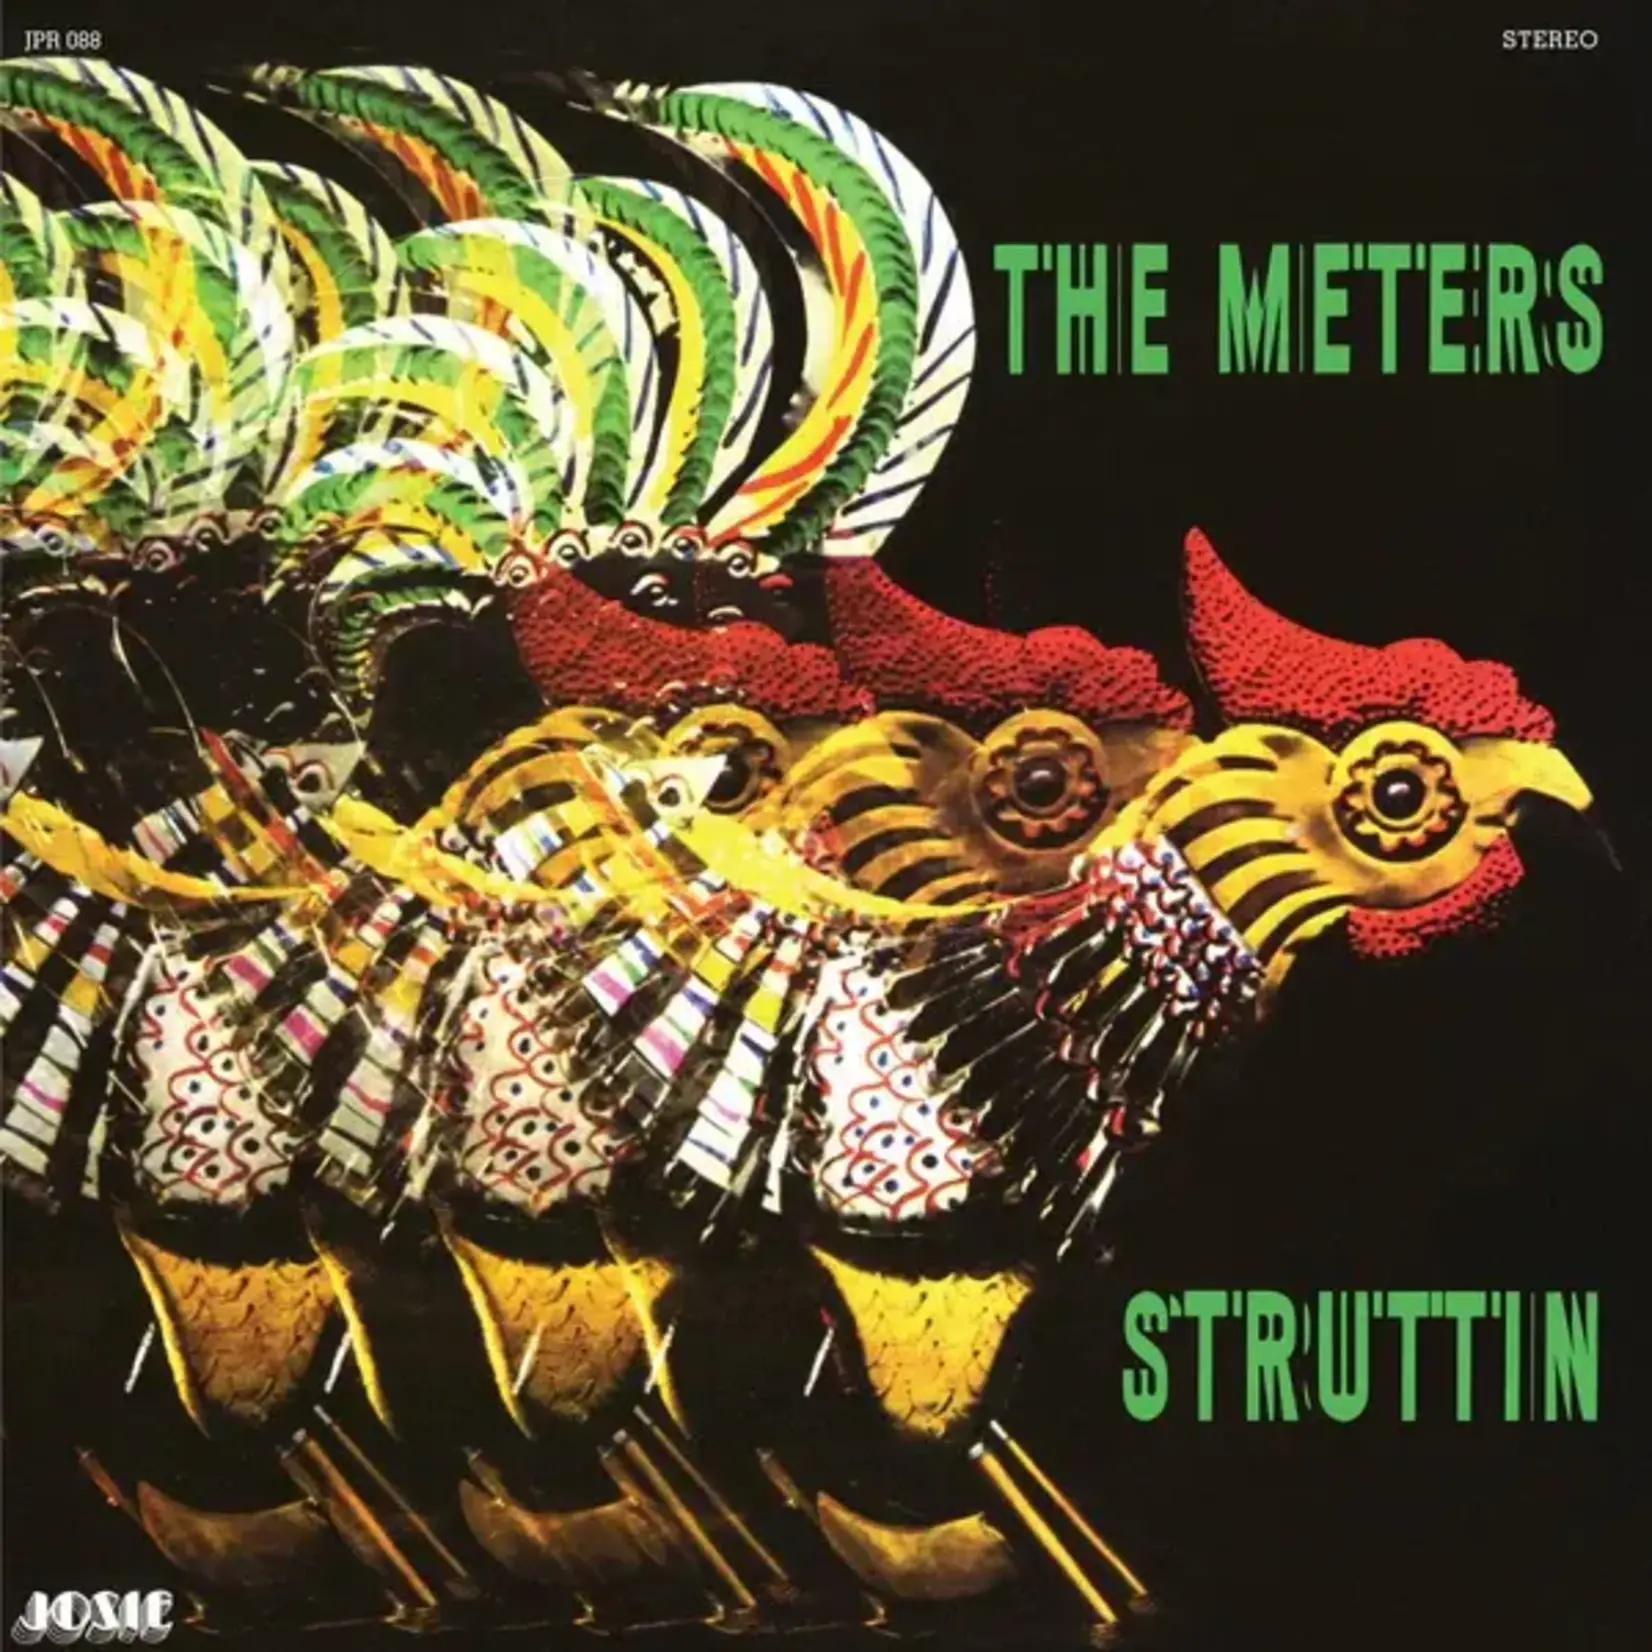 [New] Meters - Struttin' (blue vinyl)